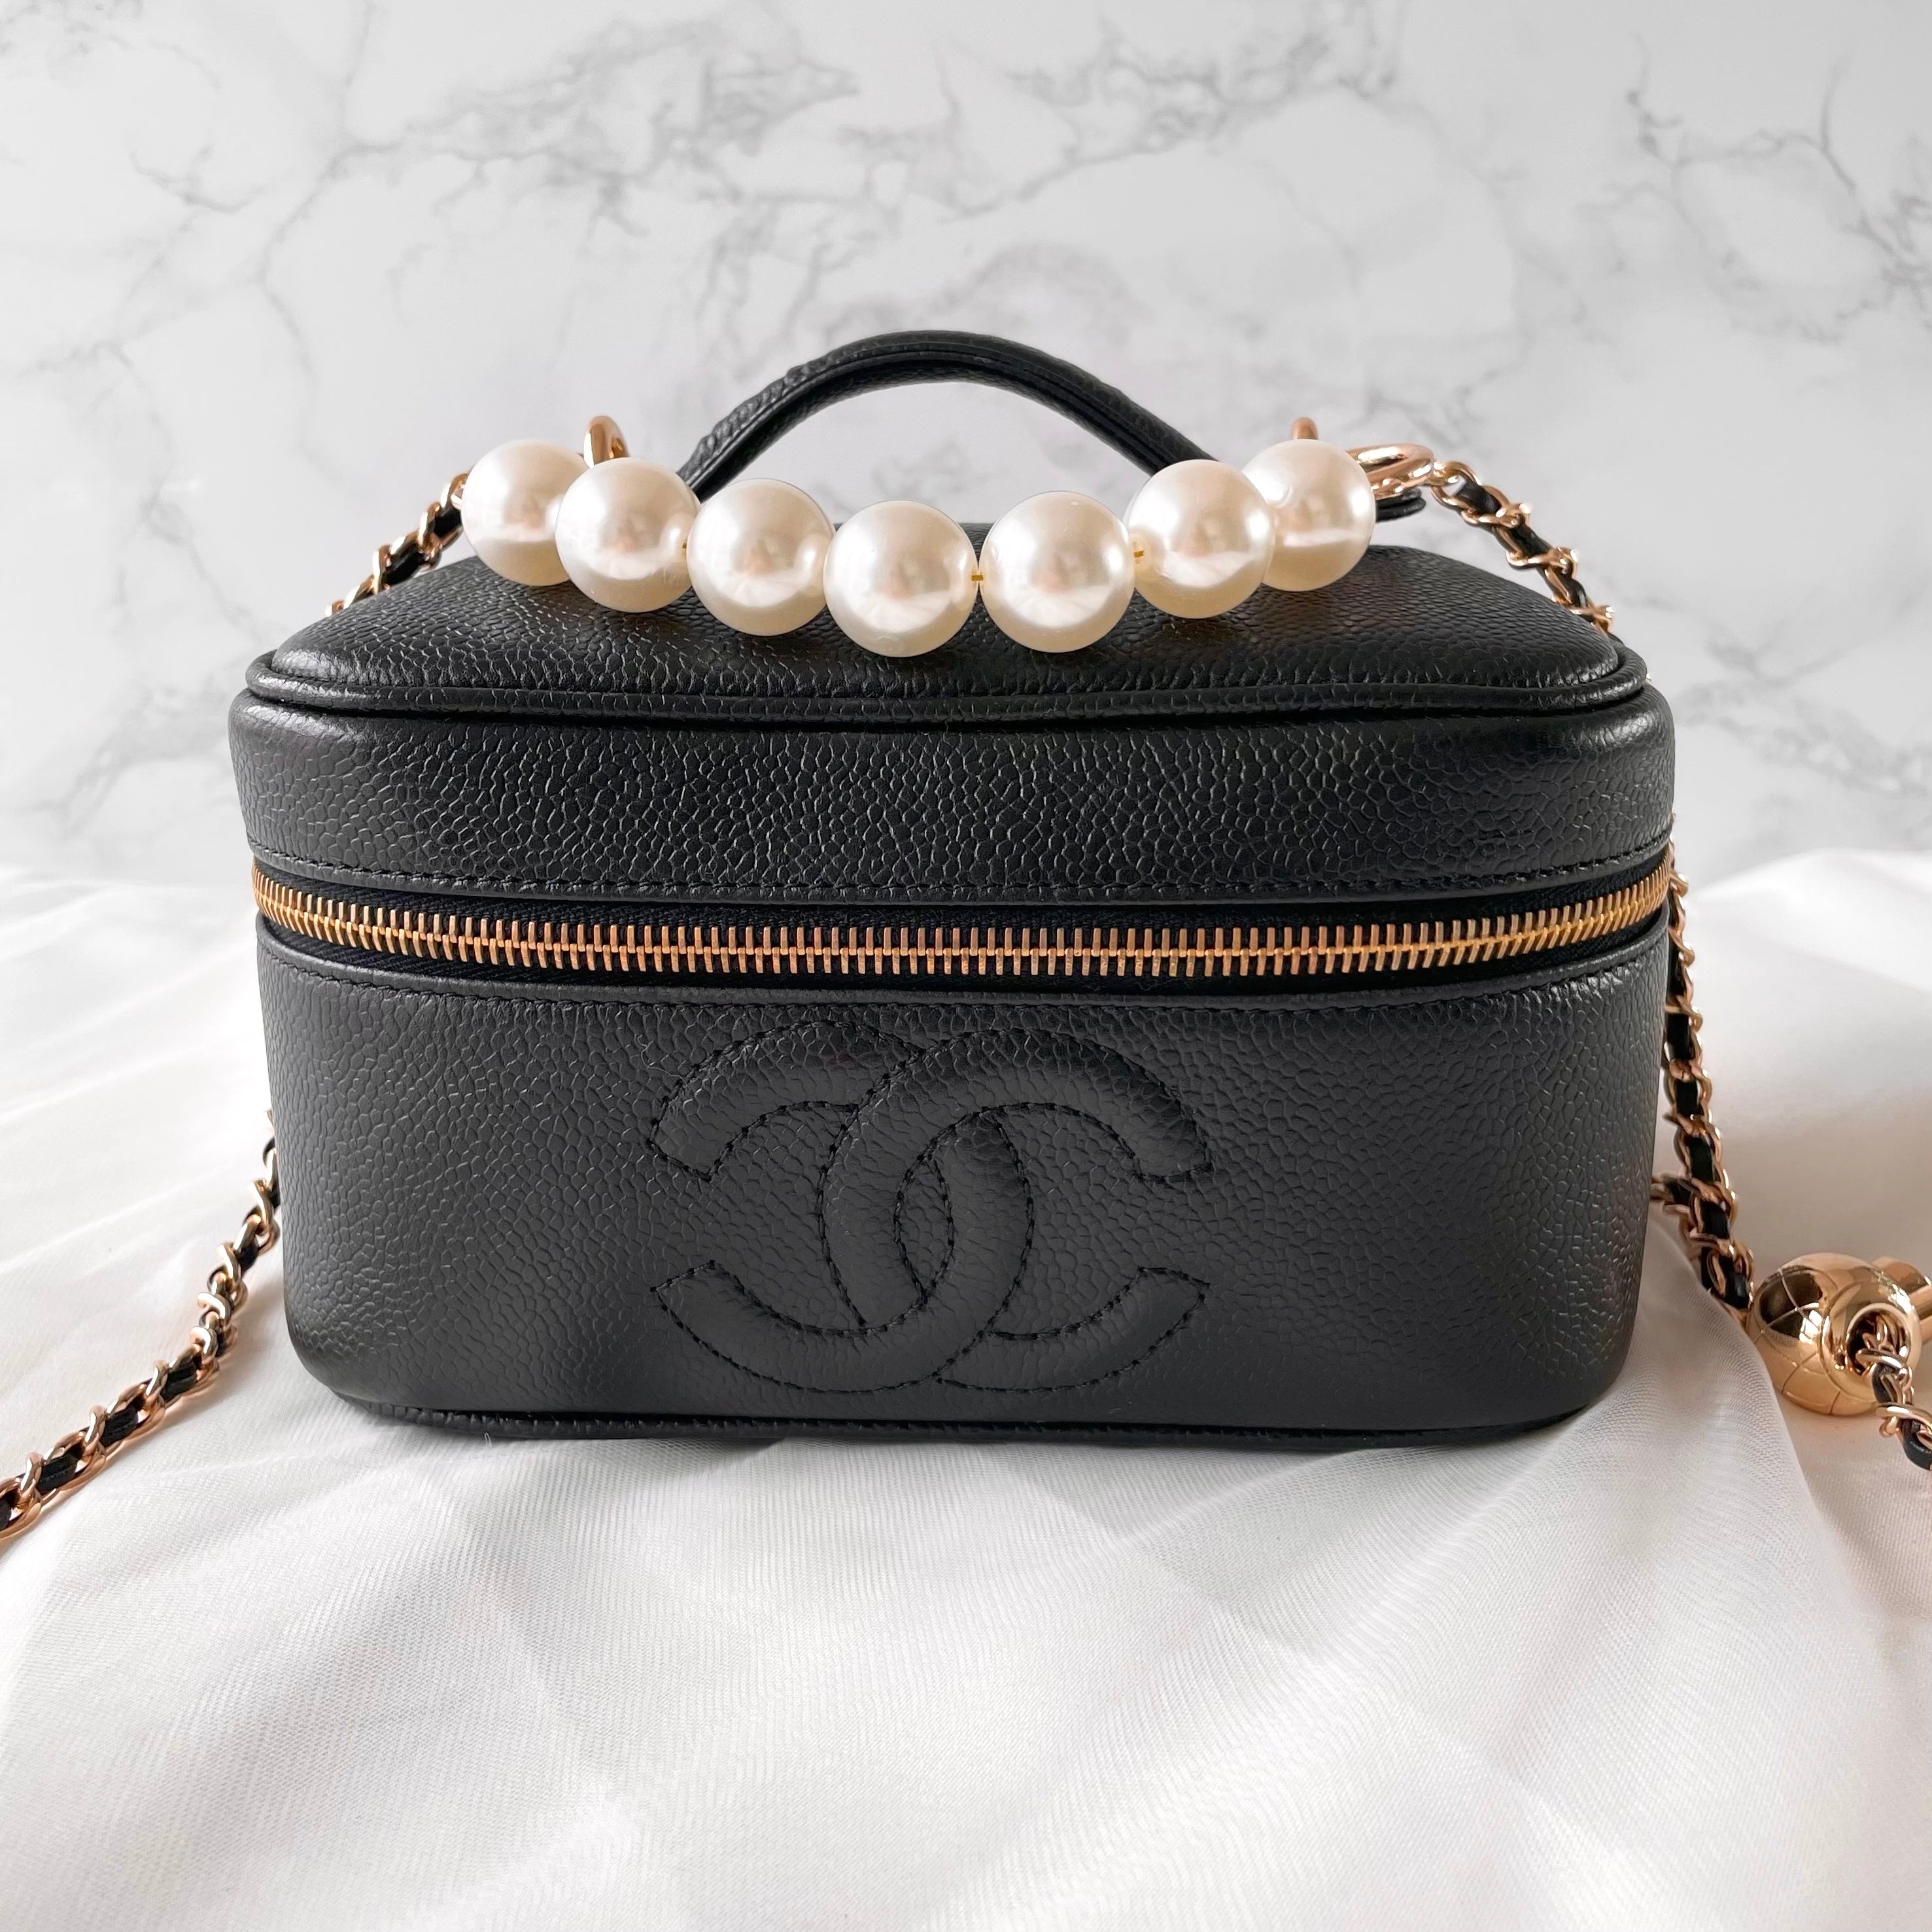 Chanel Vanity Case Rare Large Vintage 90s Top Handle Black Caviar